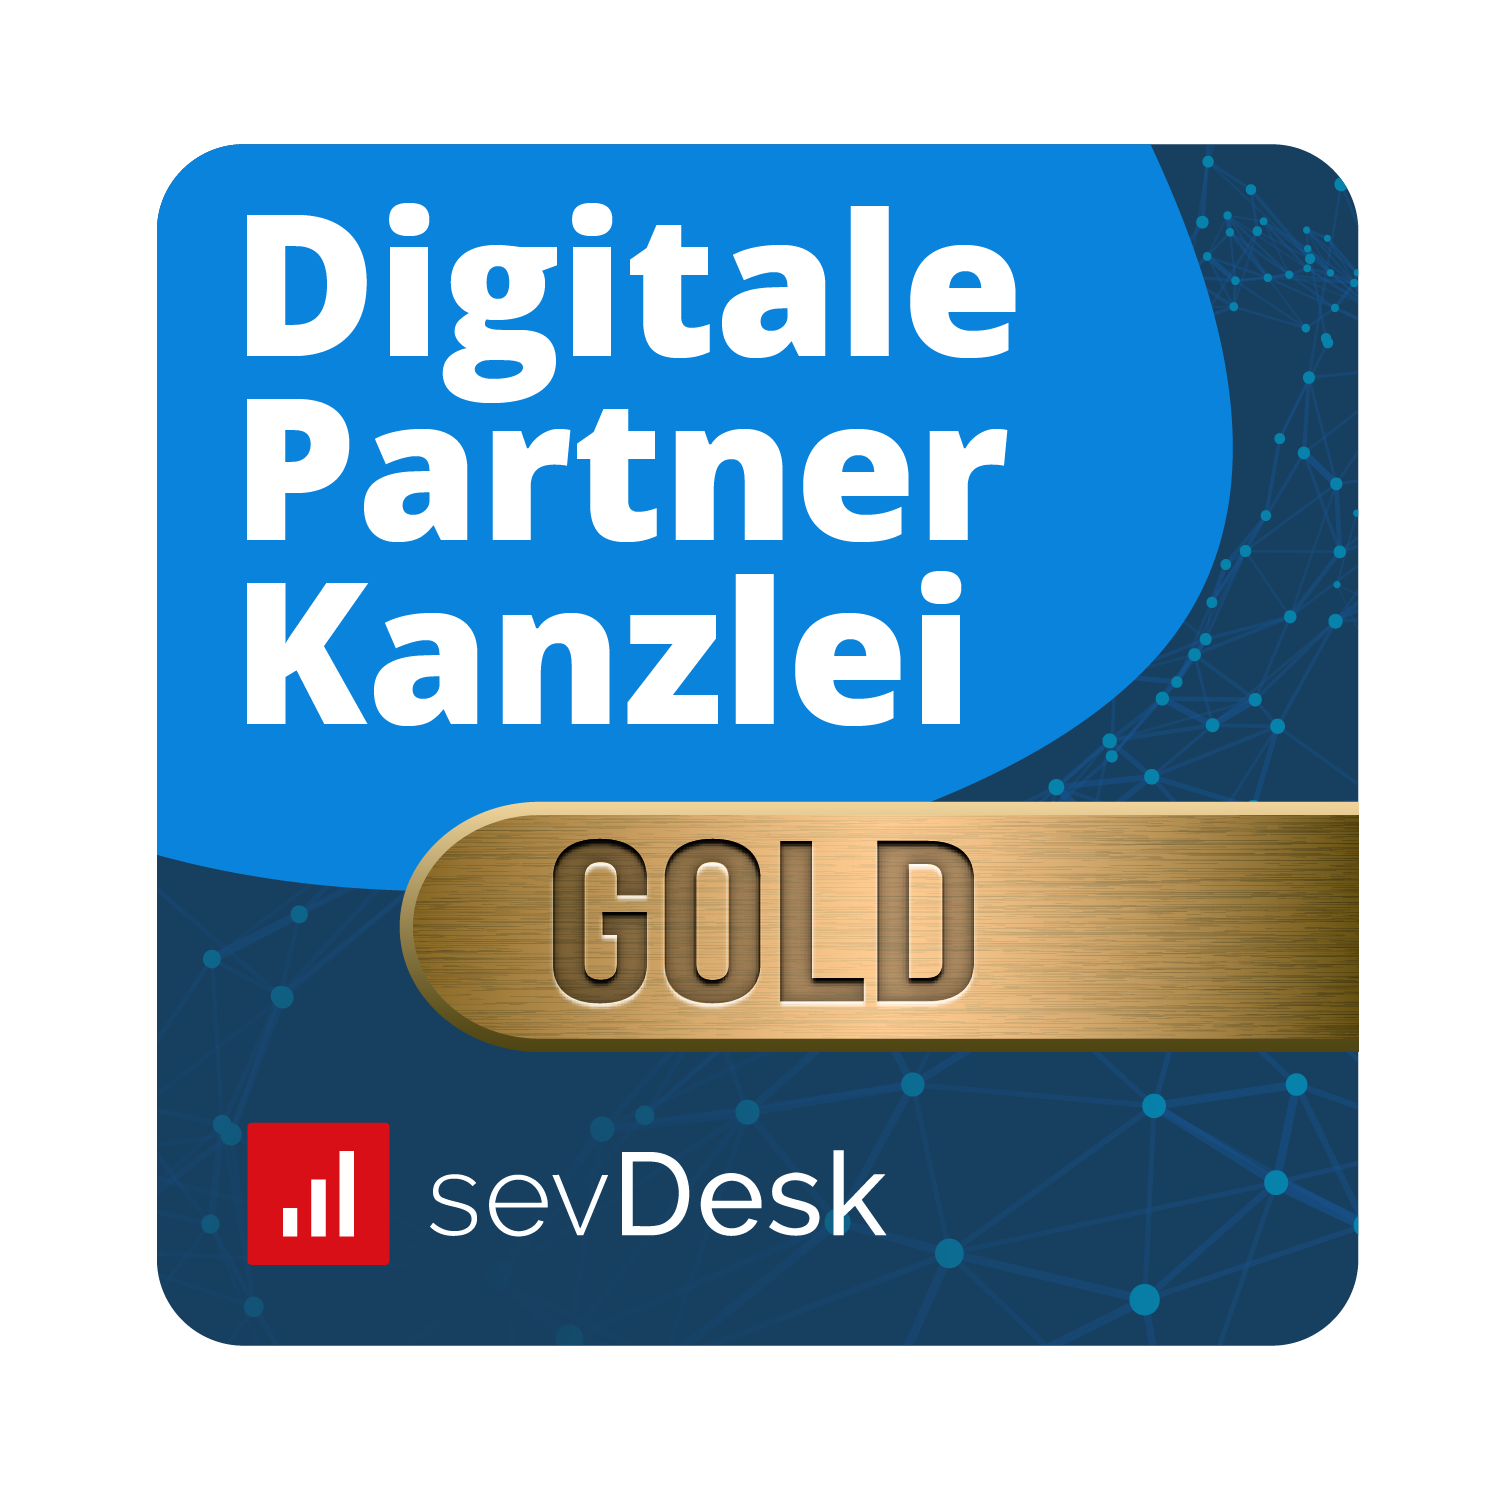 Digitale Partner Kanzlei Gold